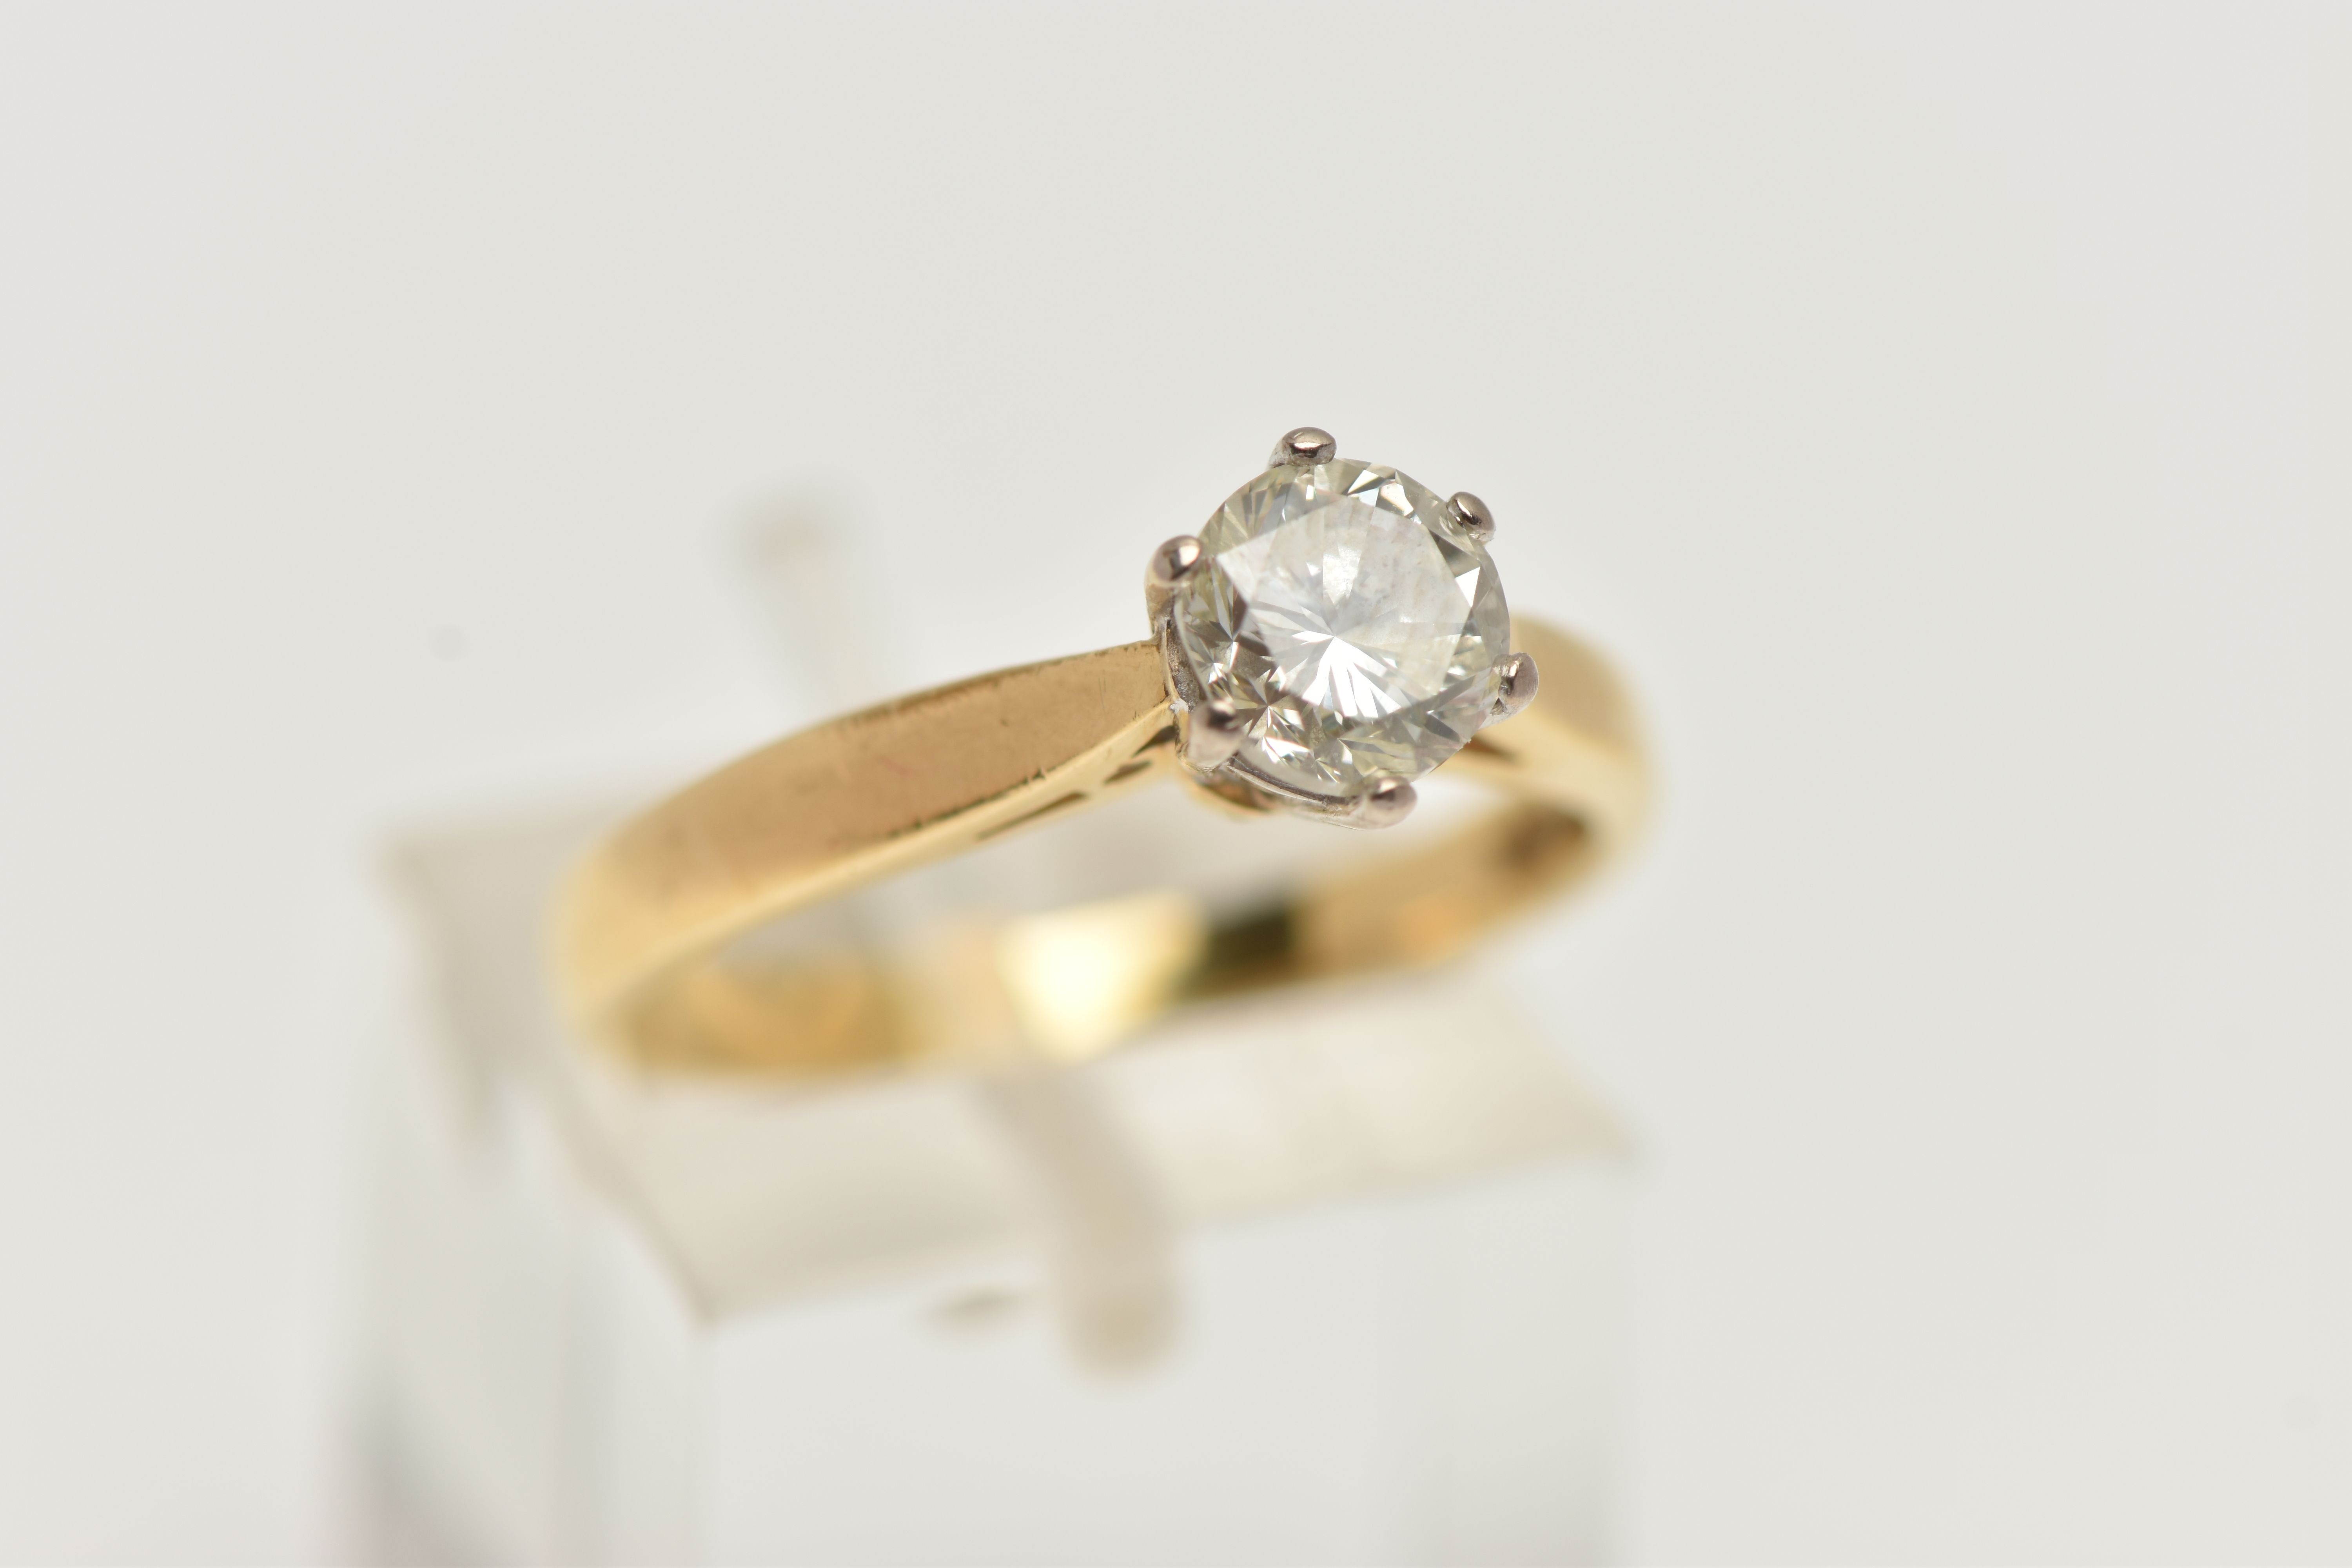 AN 18CT GOLD, SINGLE STONE DIAMOND RING, round brilliant cut diamond, estimated diamond weight 0. - Image 4 of 4